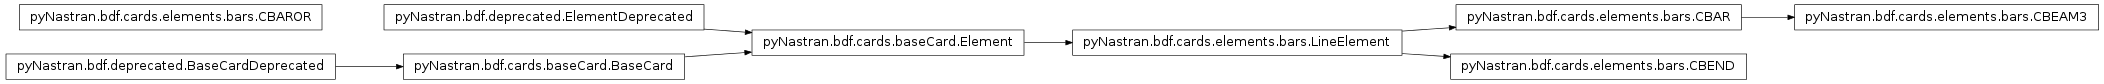 Inheritance diagram of pyNastran.bdf.cards.elements.bars